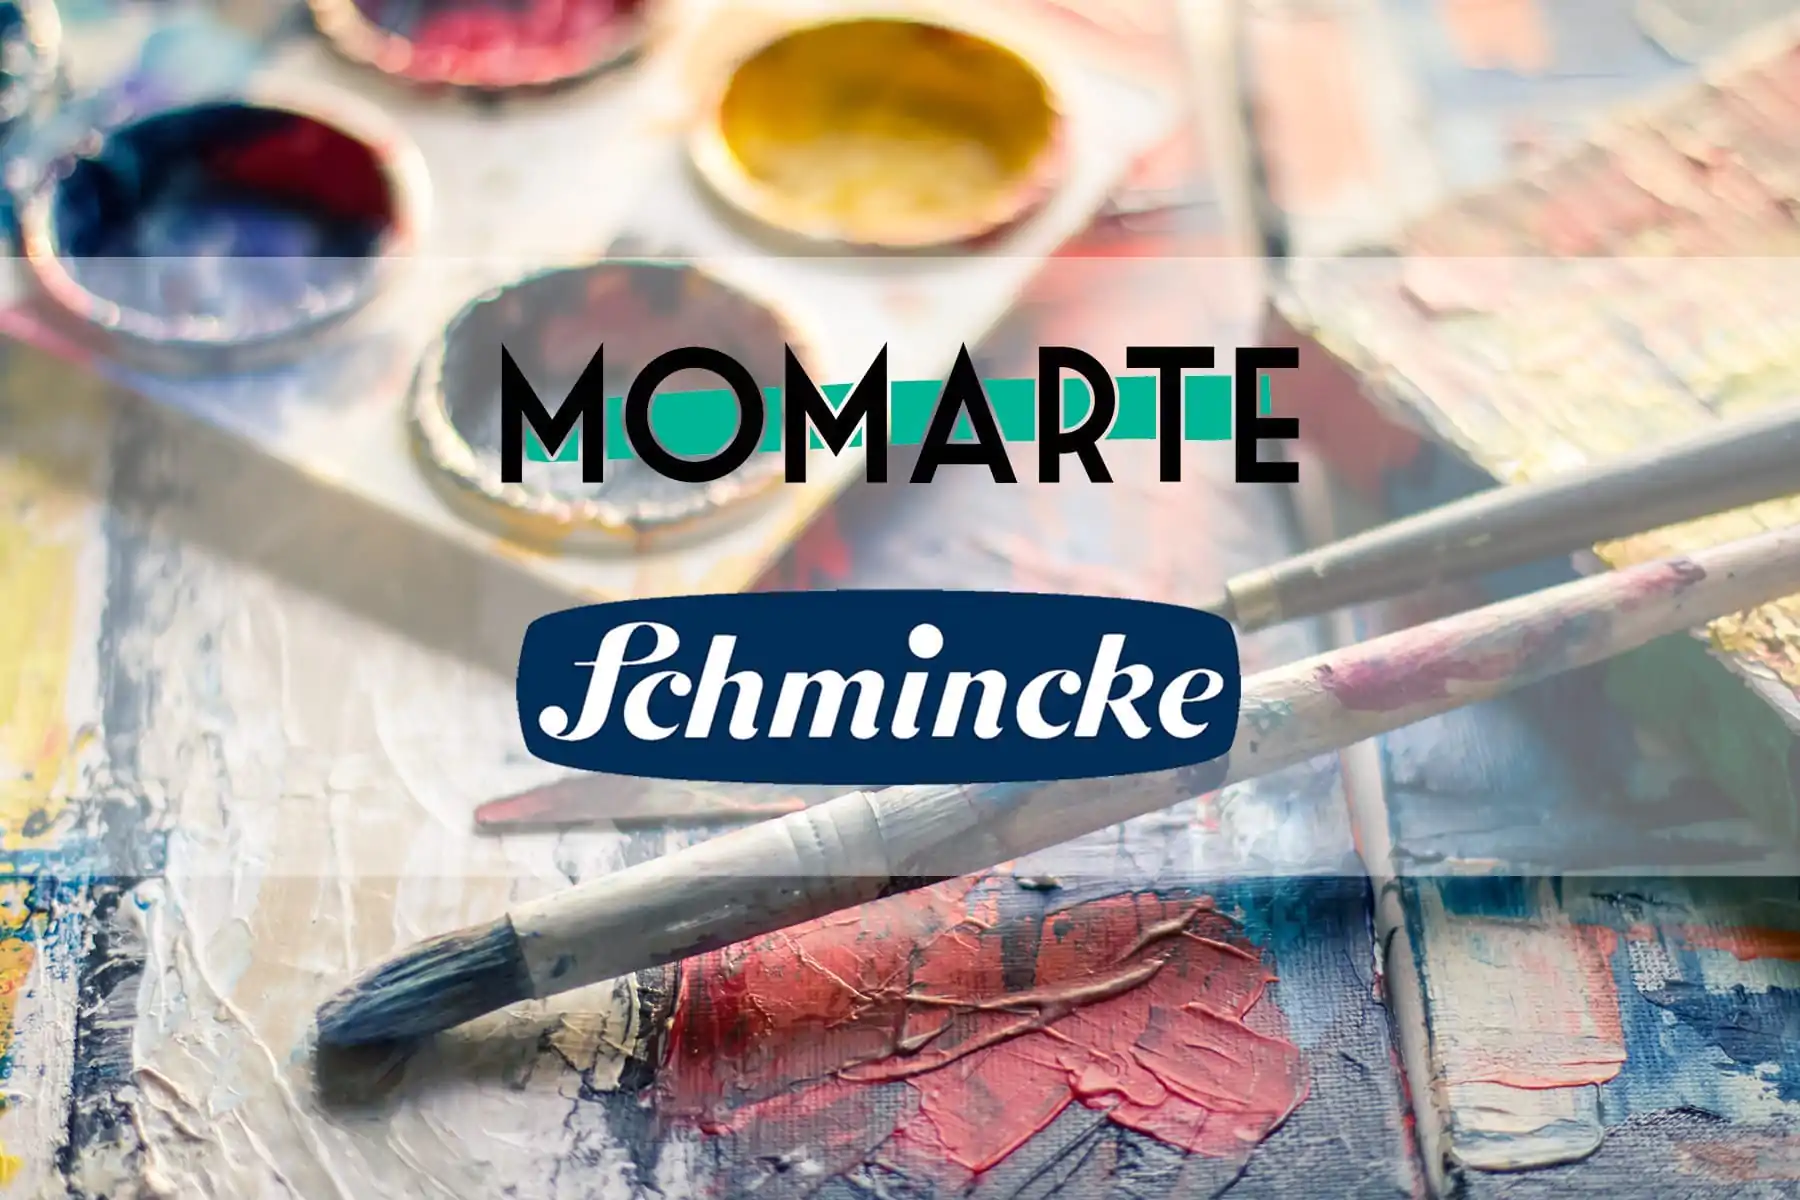 schmincke-momarte-banner